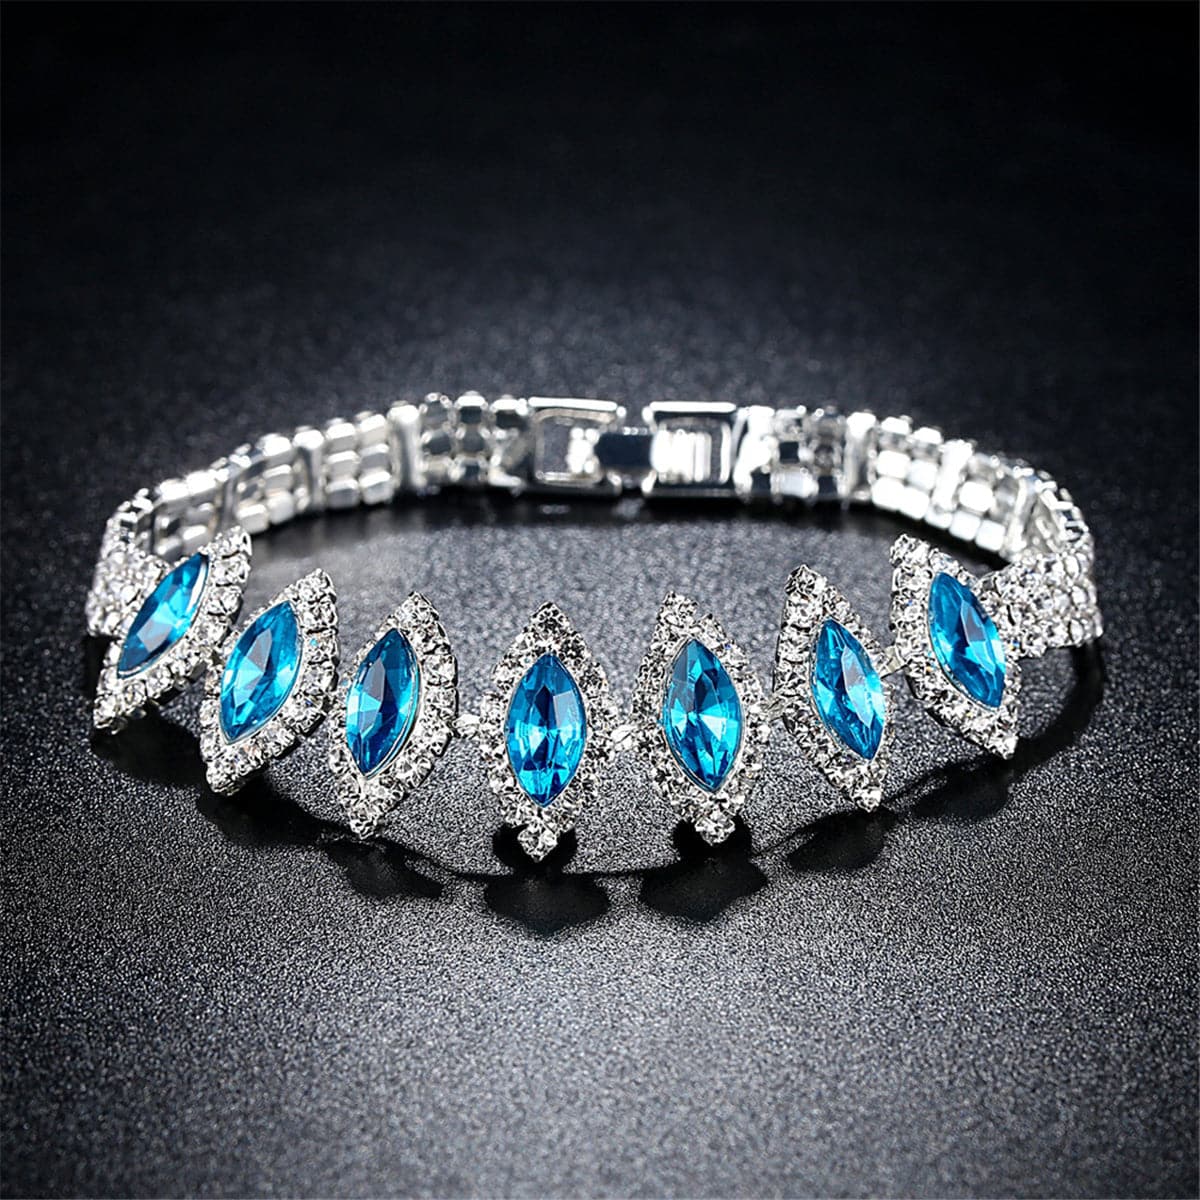 Blue Pear Crystal & Silver-Plated Station Bracelet